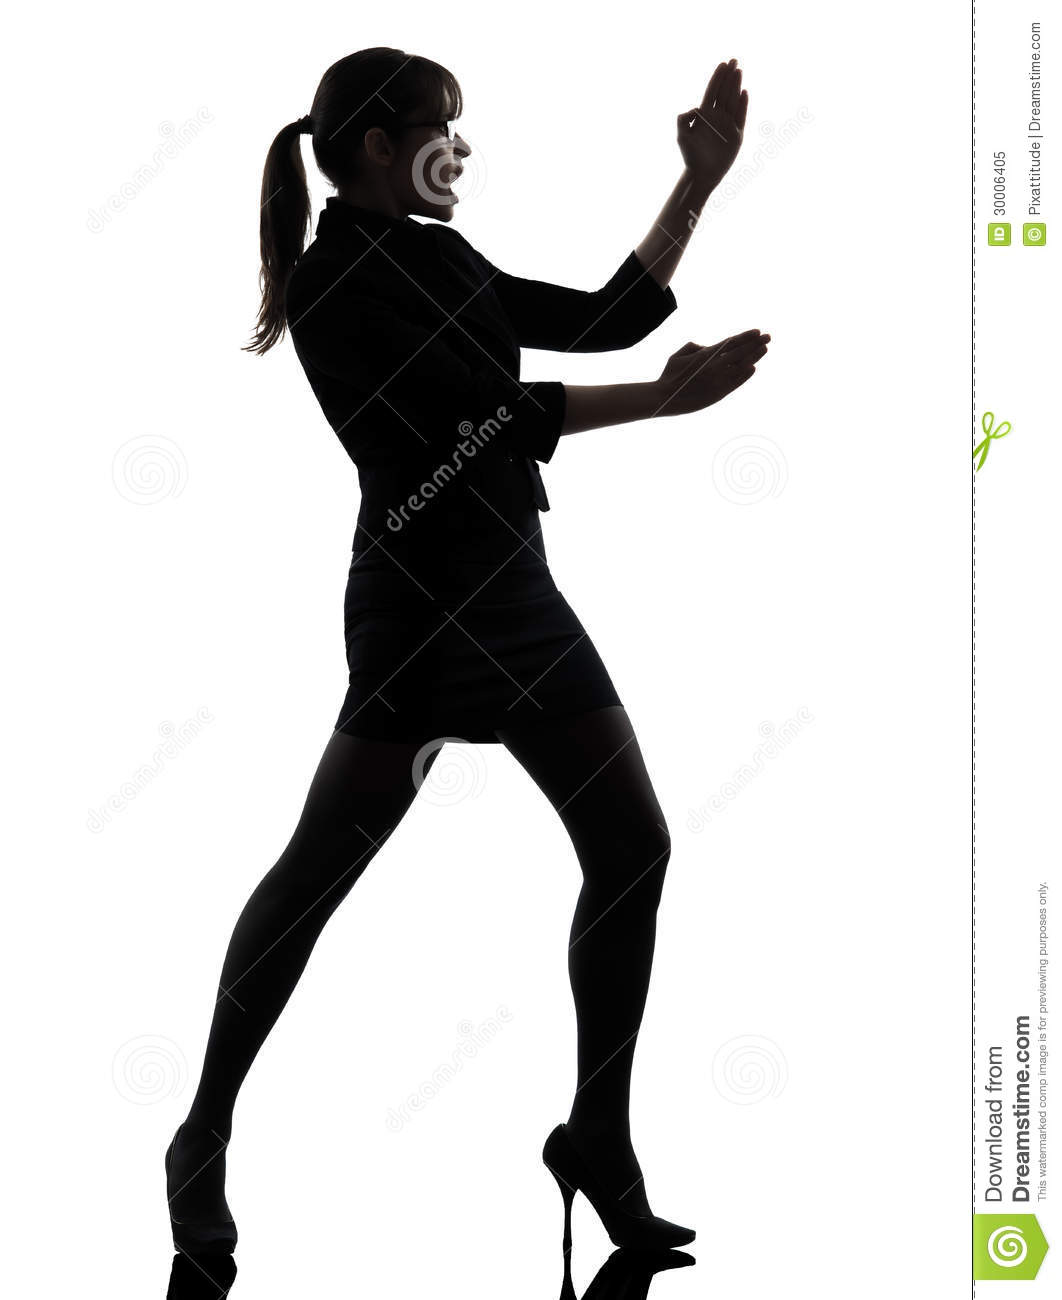 Business Woman Karate Self Defense Silhouette Royalty Free Stock Photo